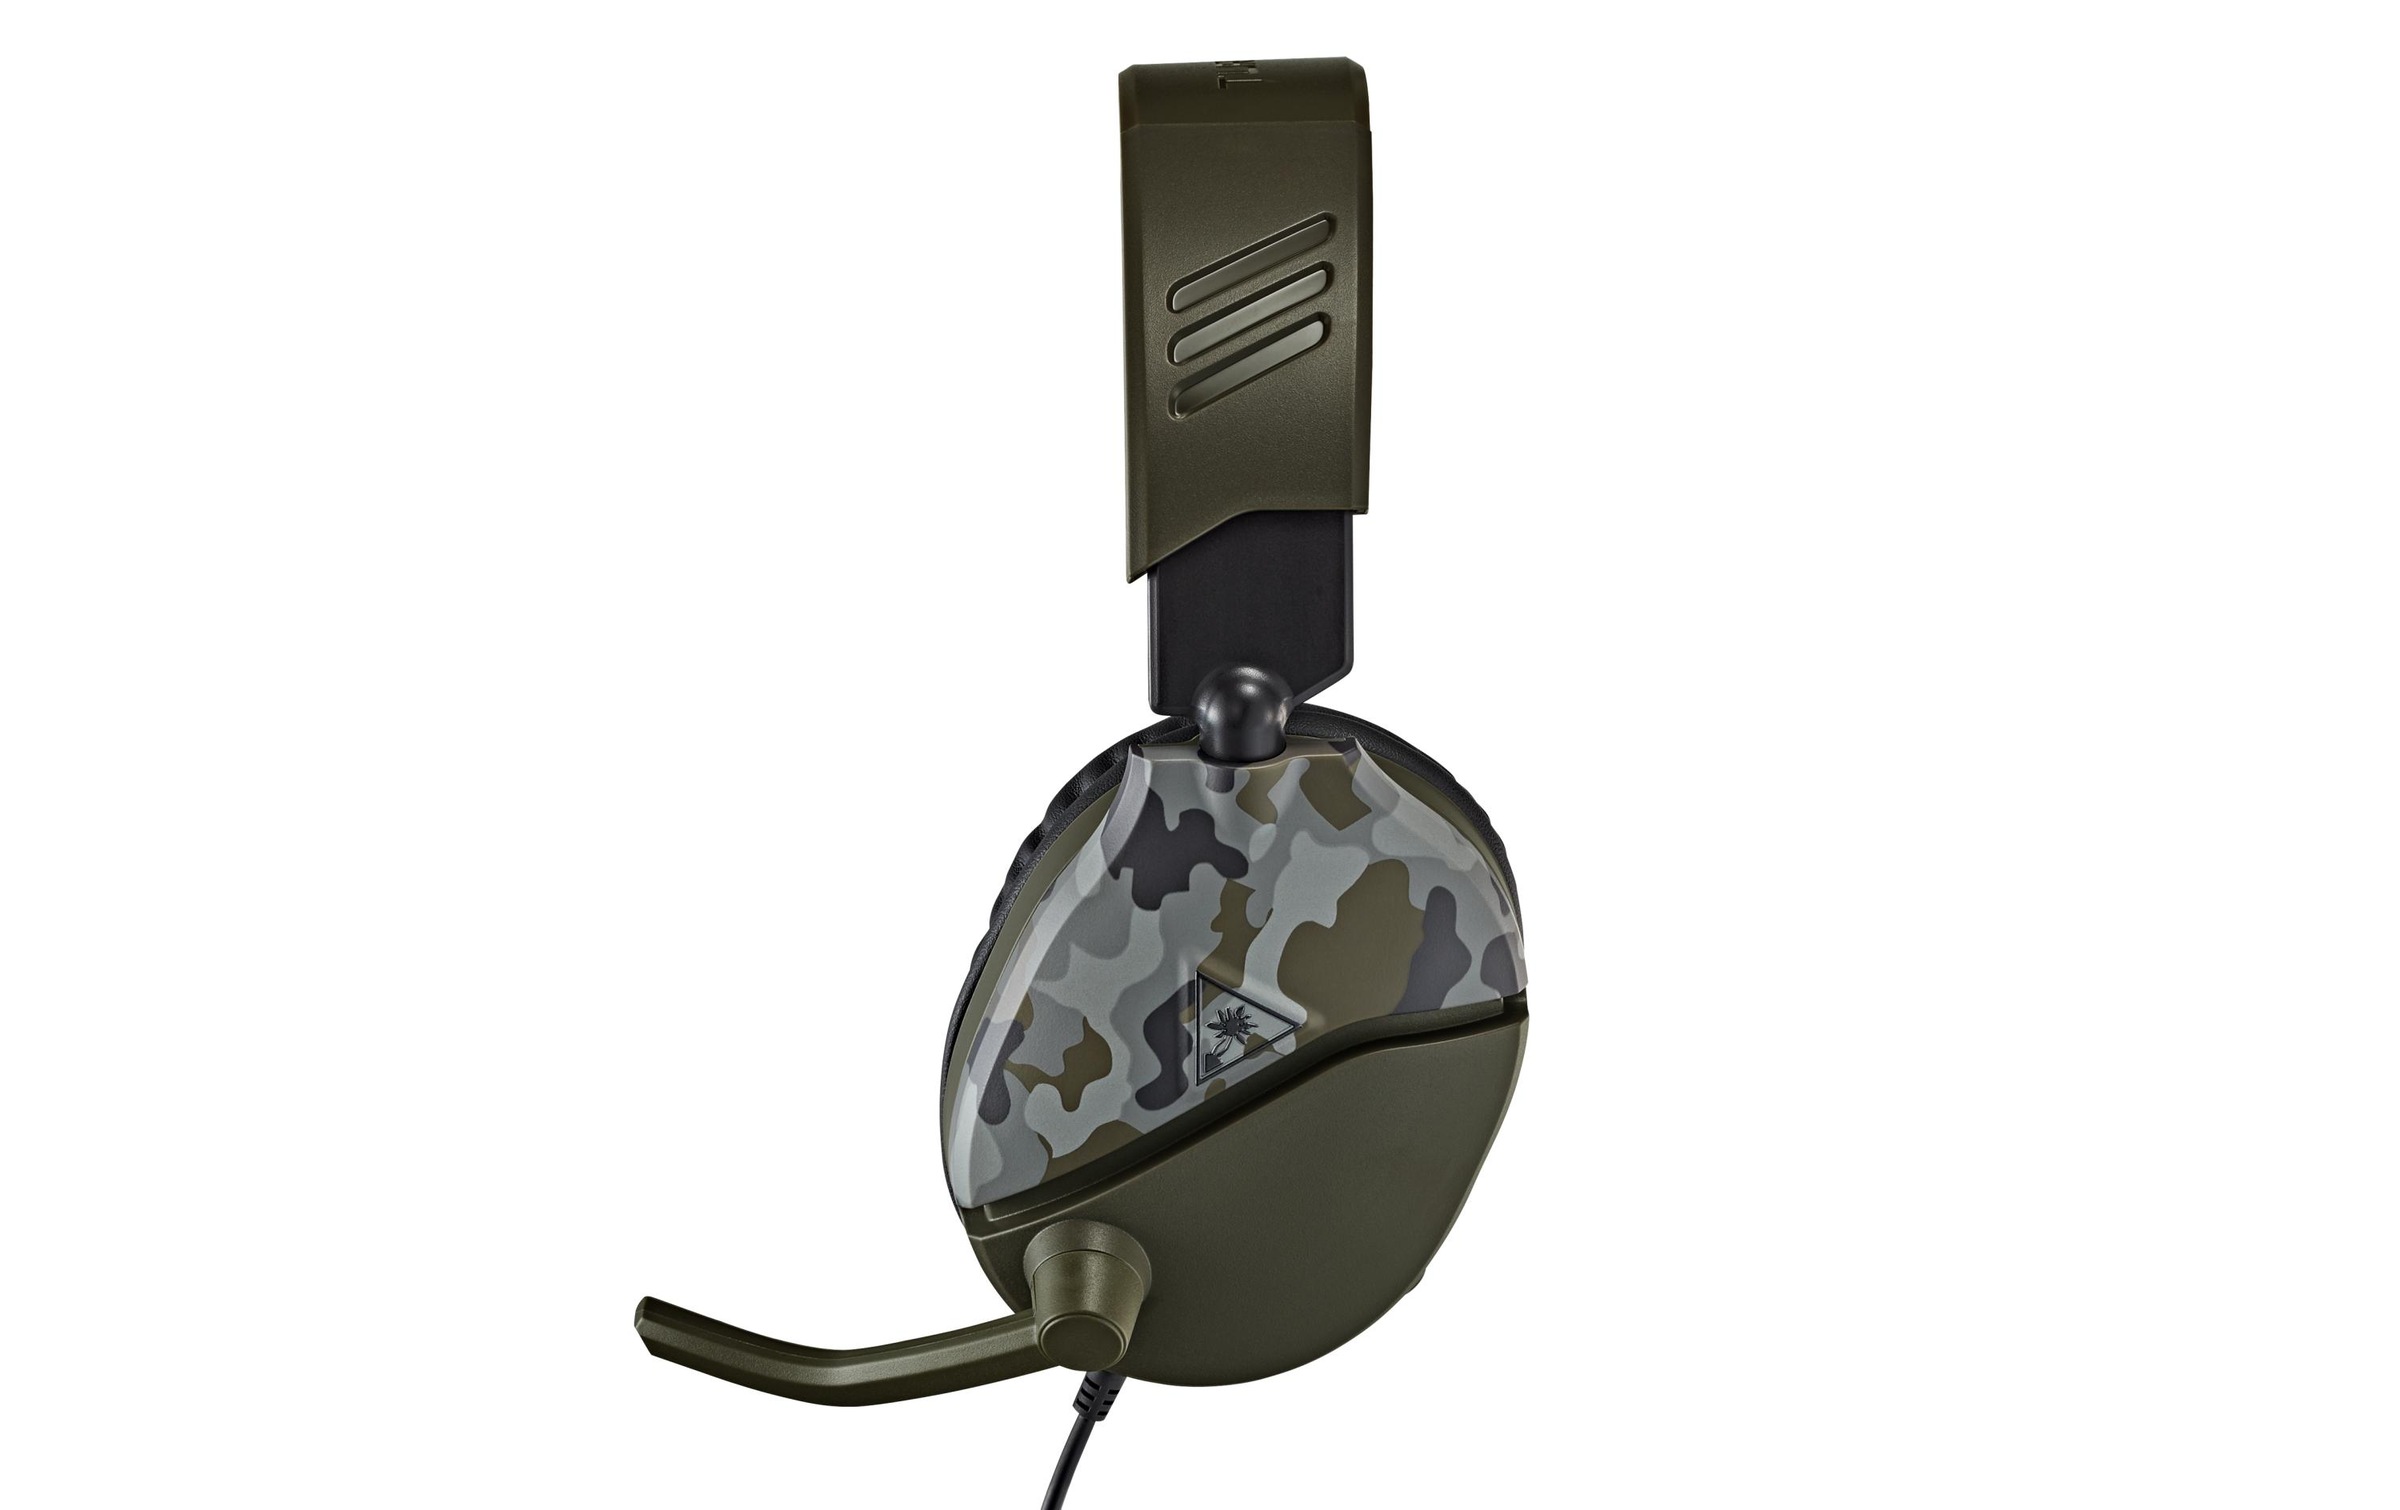 Turtle Beach Gaming-Headset »Ear Force Recon 70 Camo Grün/Schwarz«